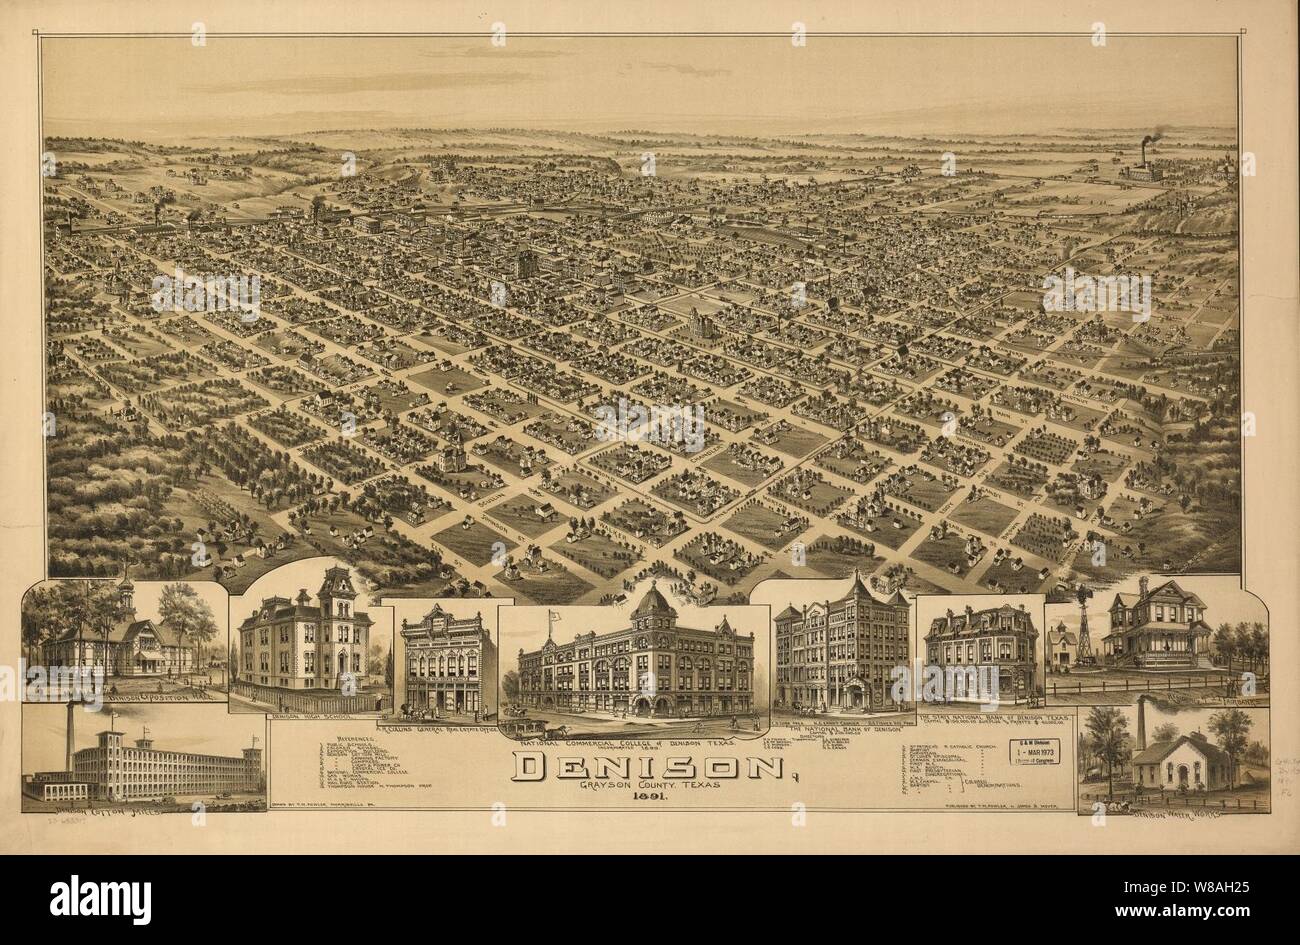 Denison, Grayson County, Texas 1891. Foto Stock